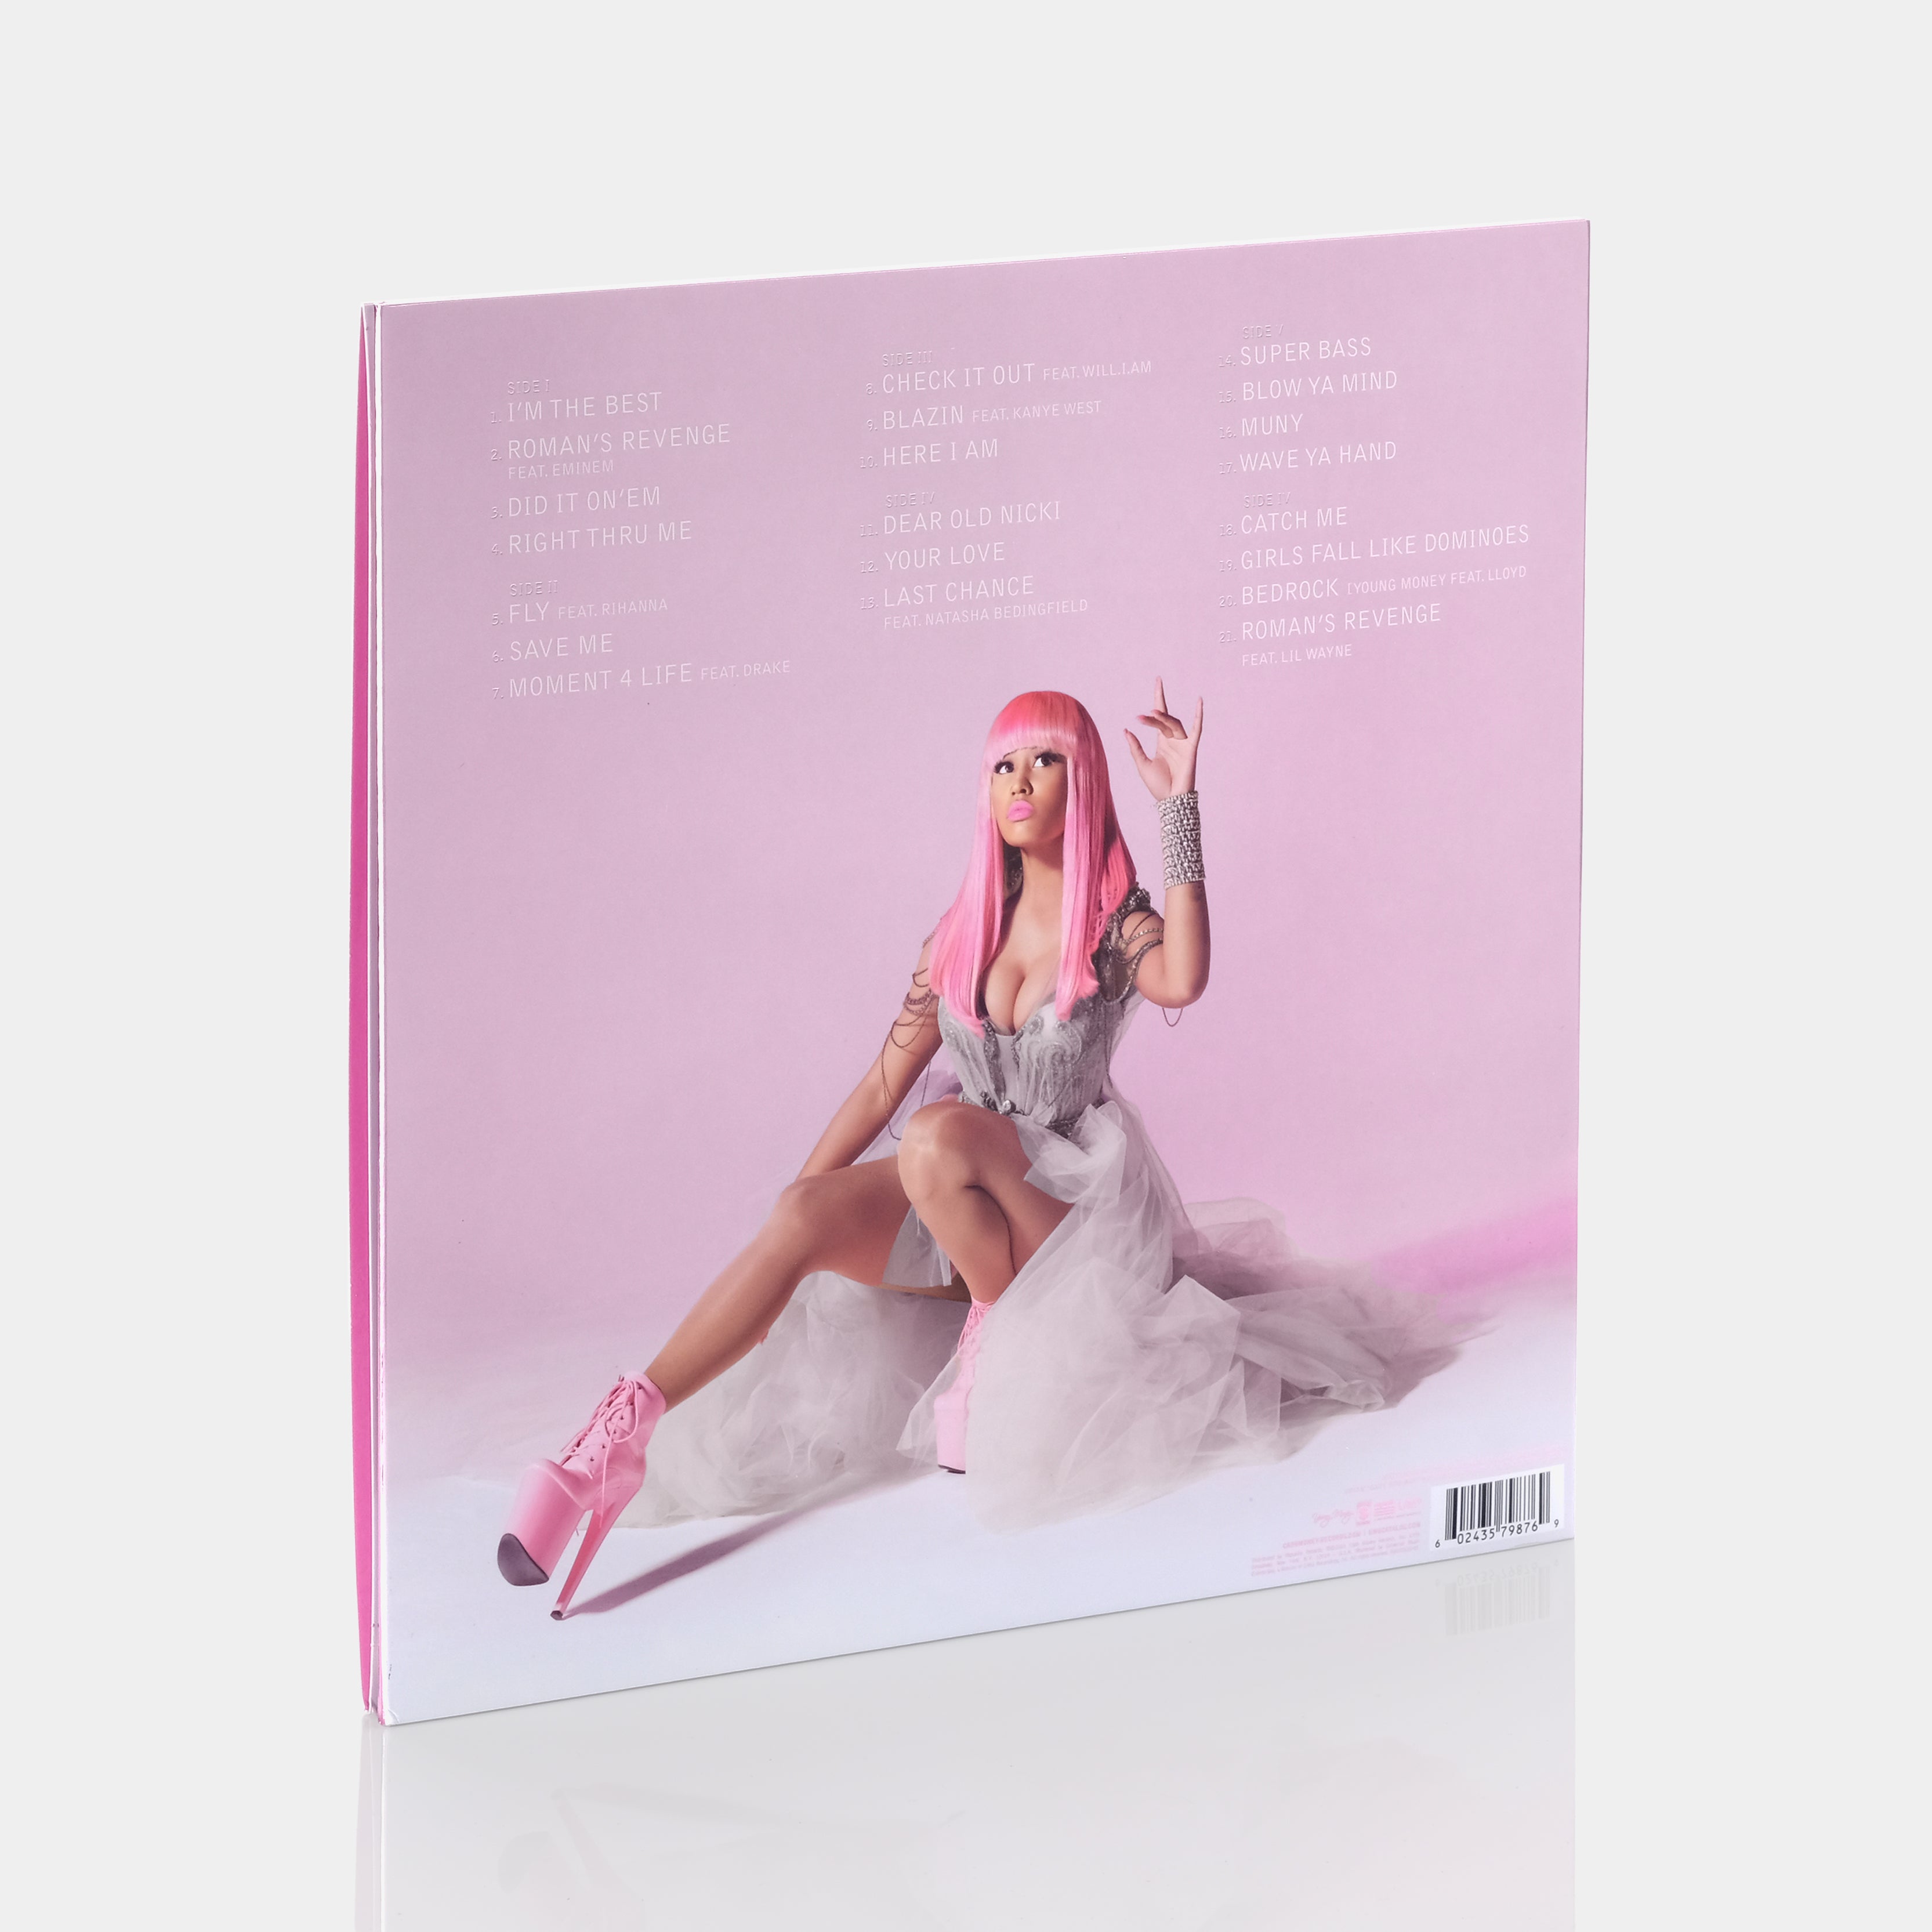 Nicki Minaj - Pink Friday (Deluxe Edition) 3xLP Pink Swirl Vinyl Record